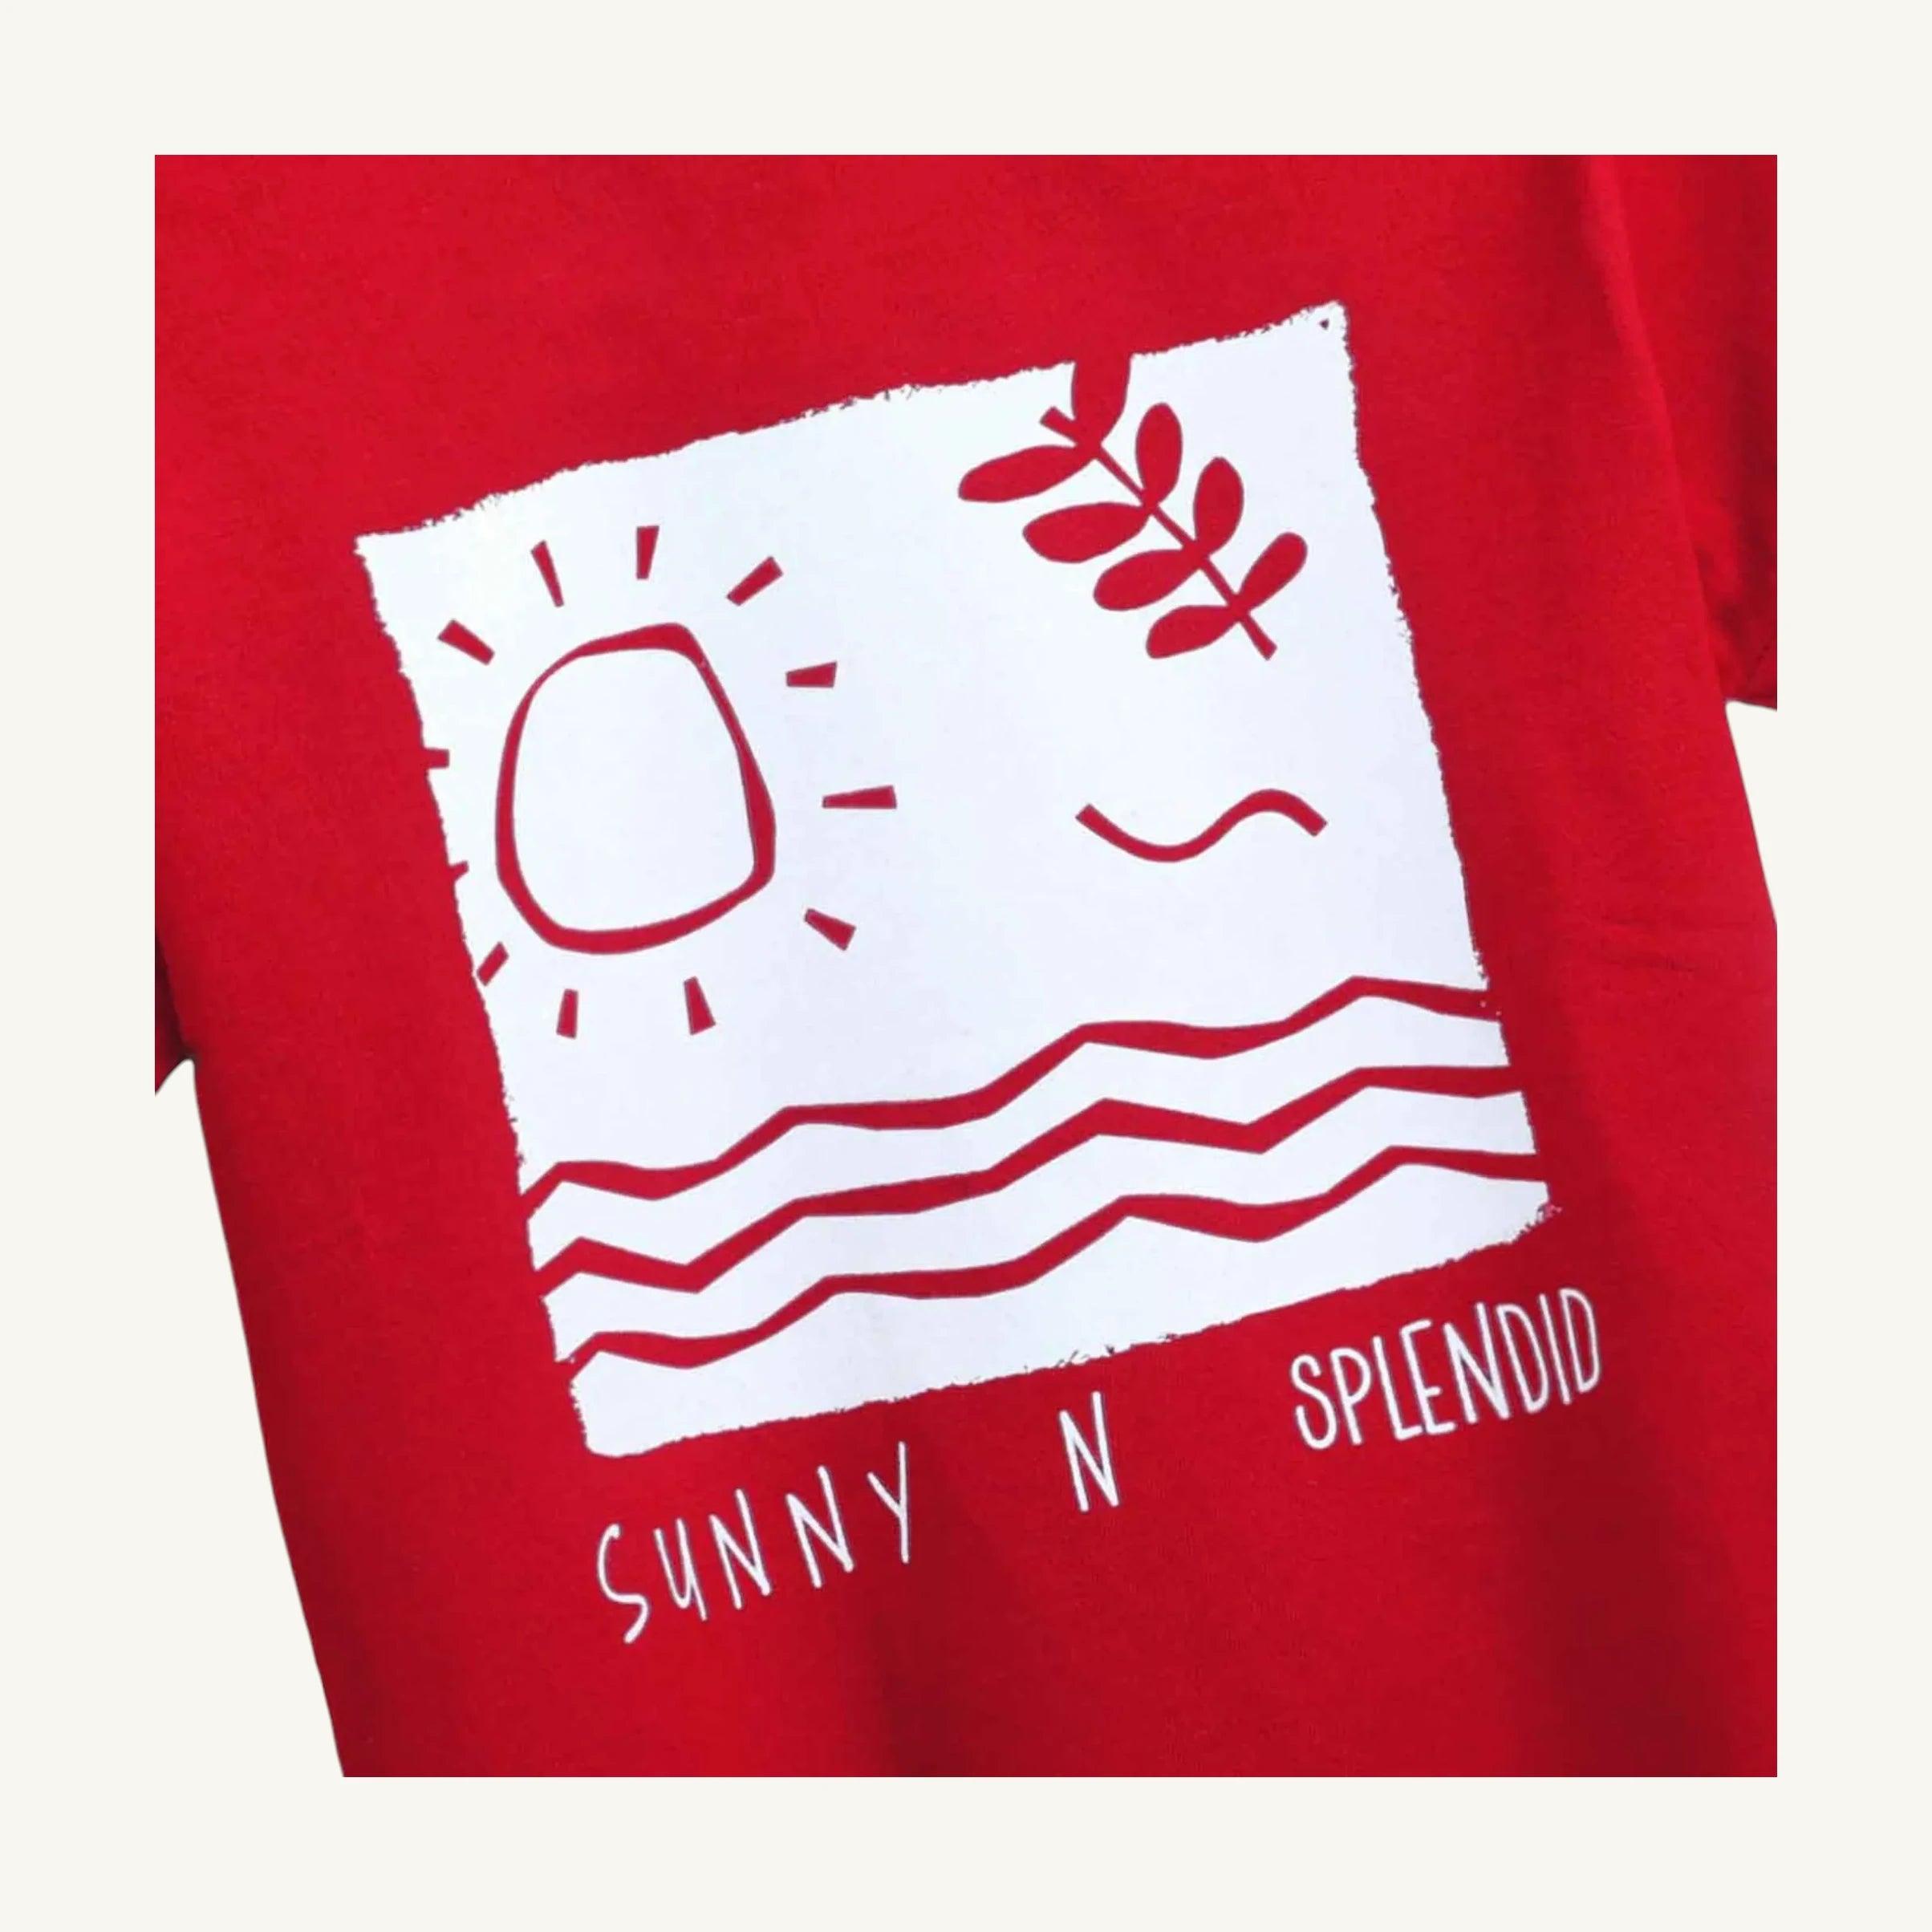 Kids Sunny T-shirt - Guugly Wuugly